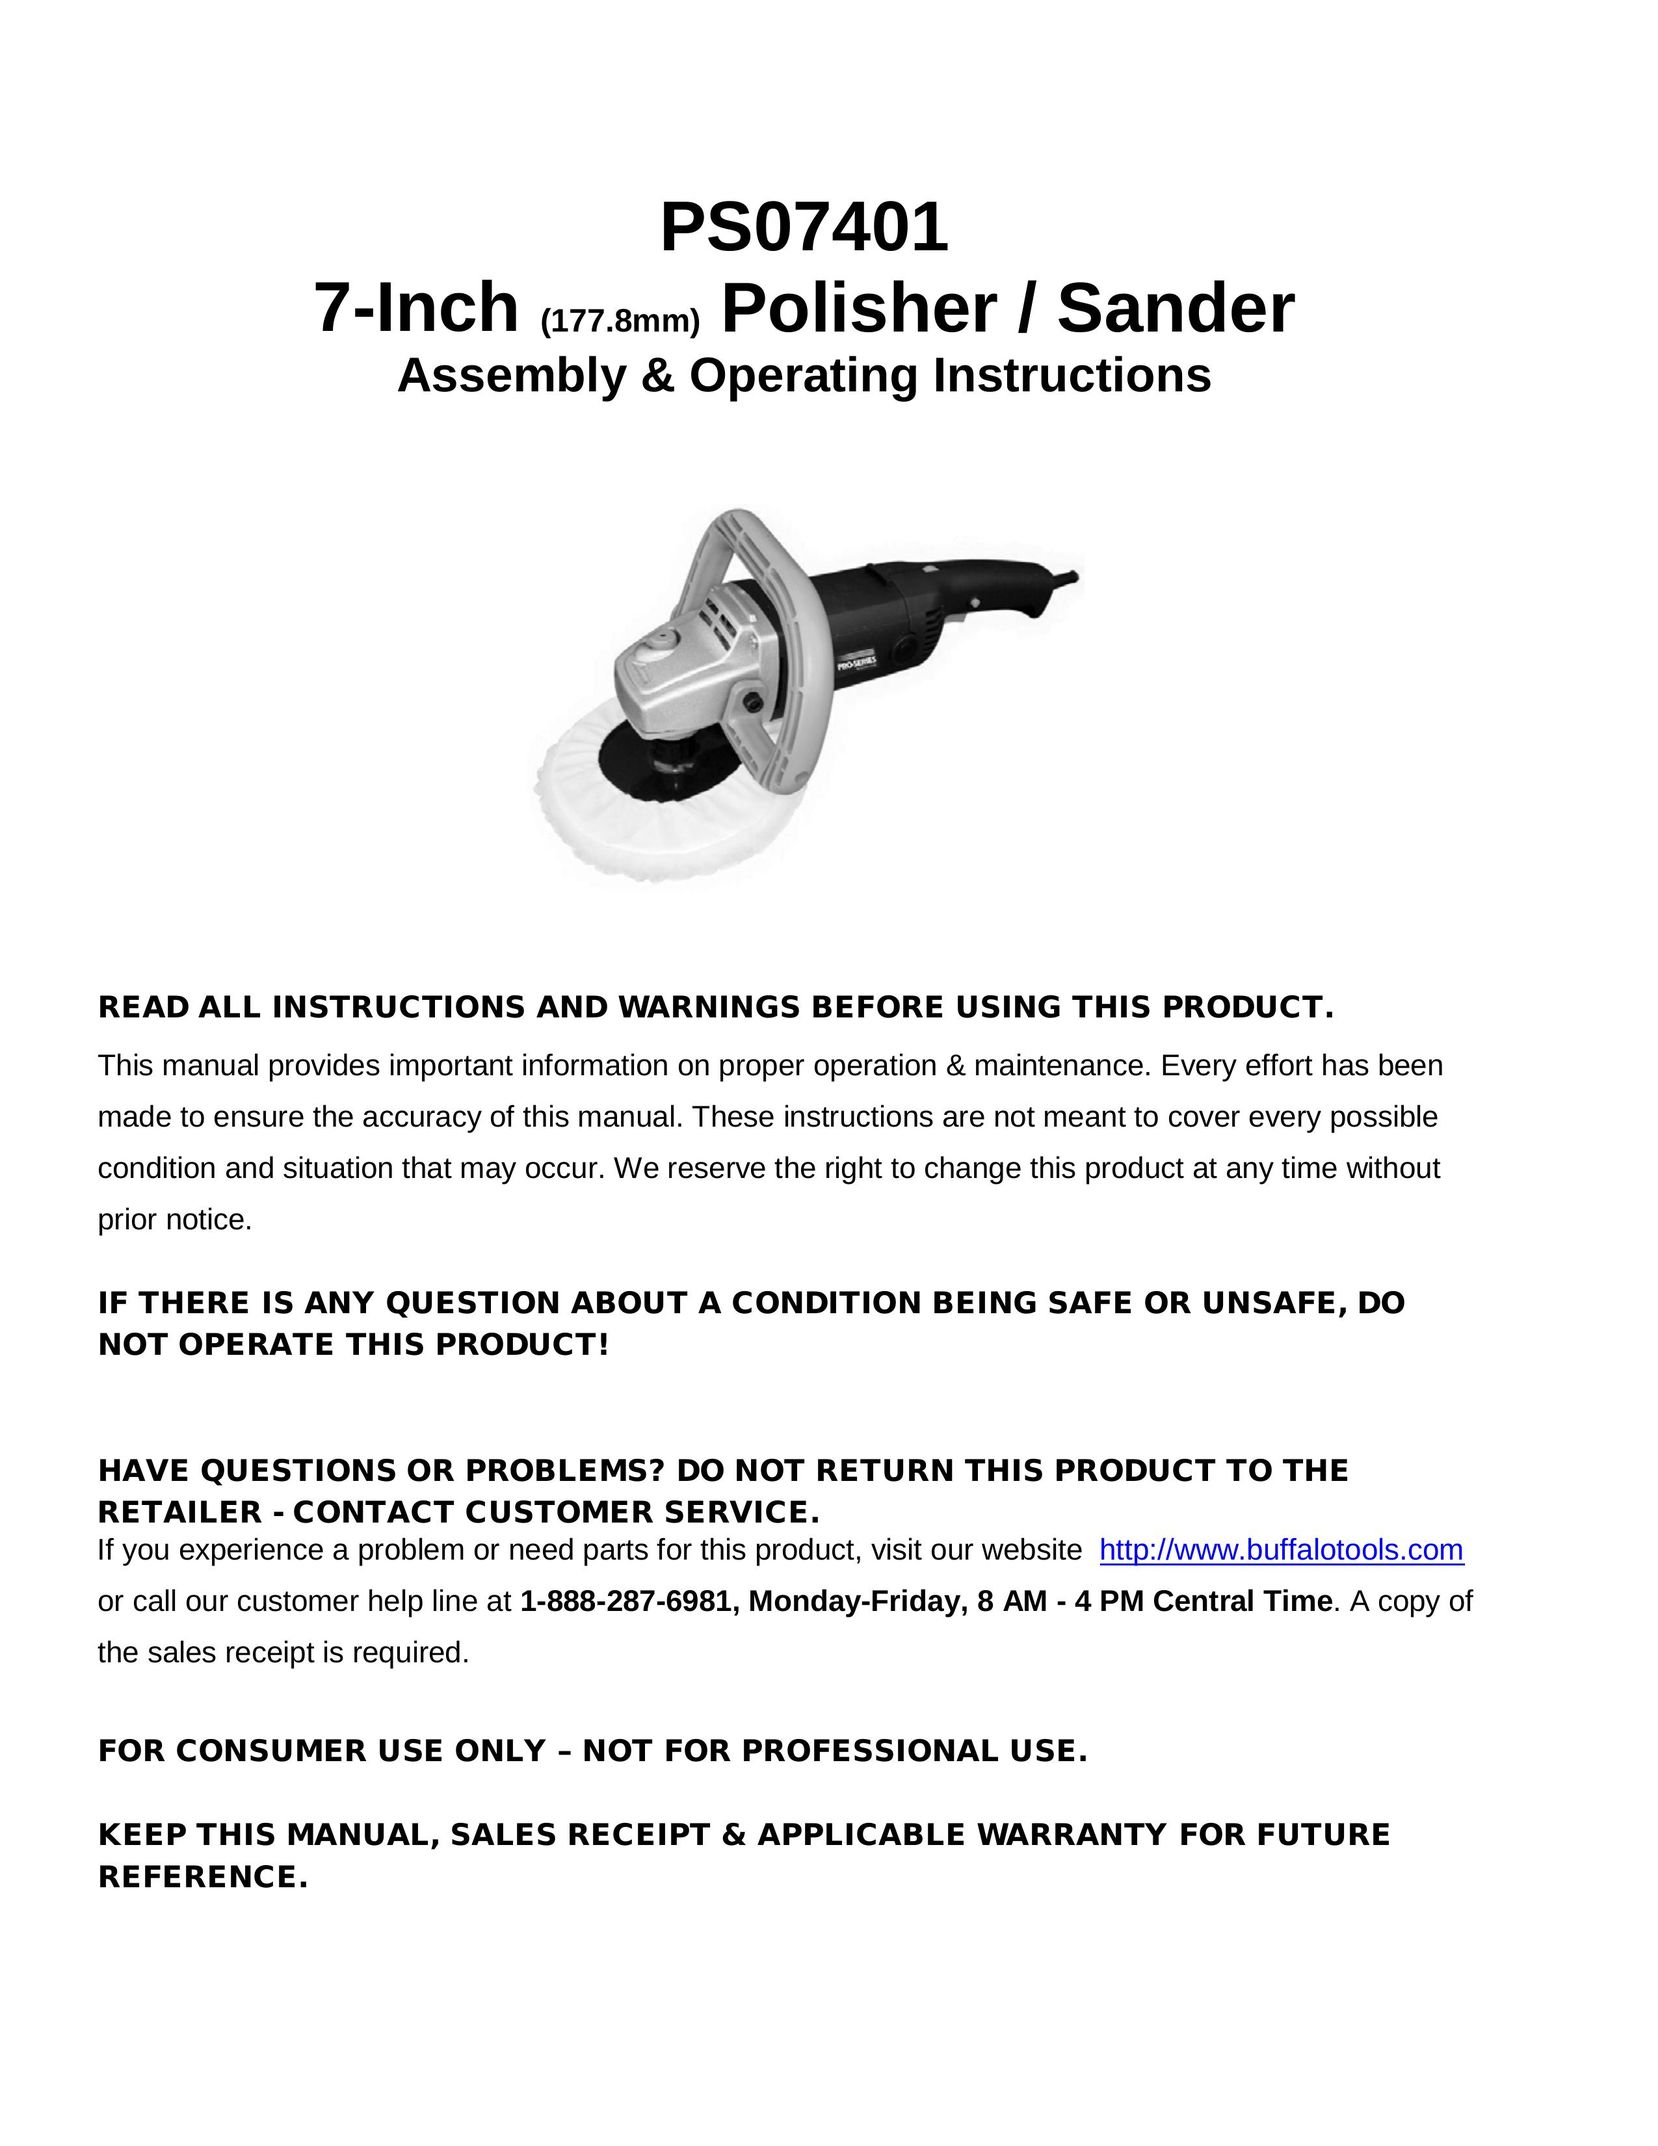 Buffalo Tools PS07401 Sander User Manual